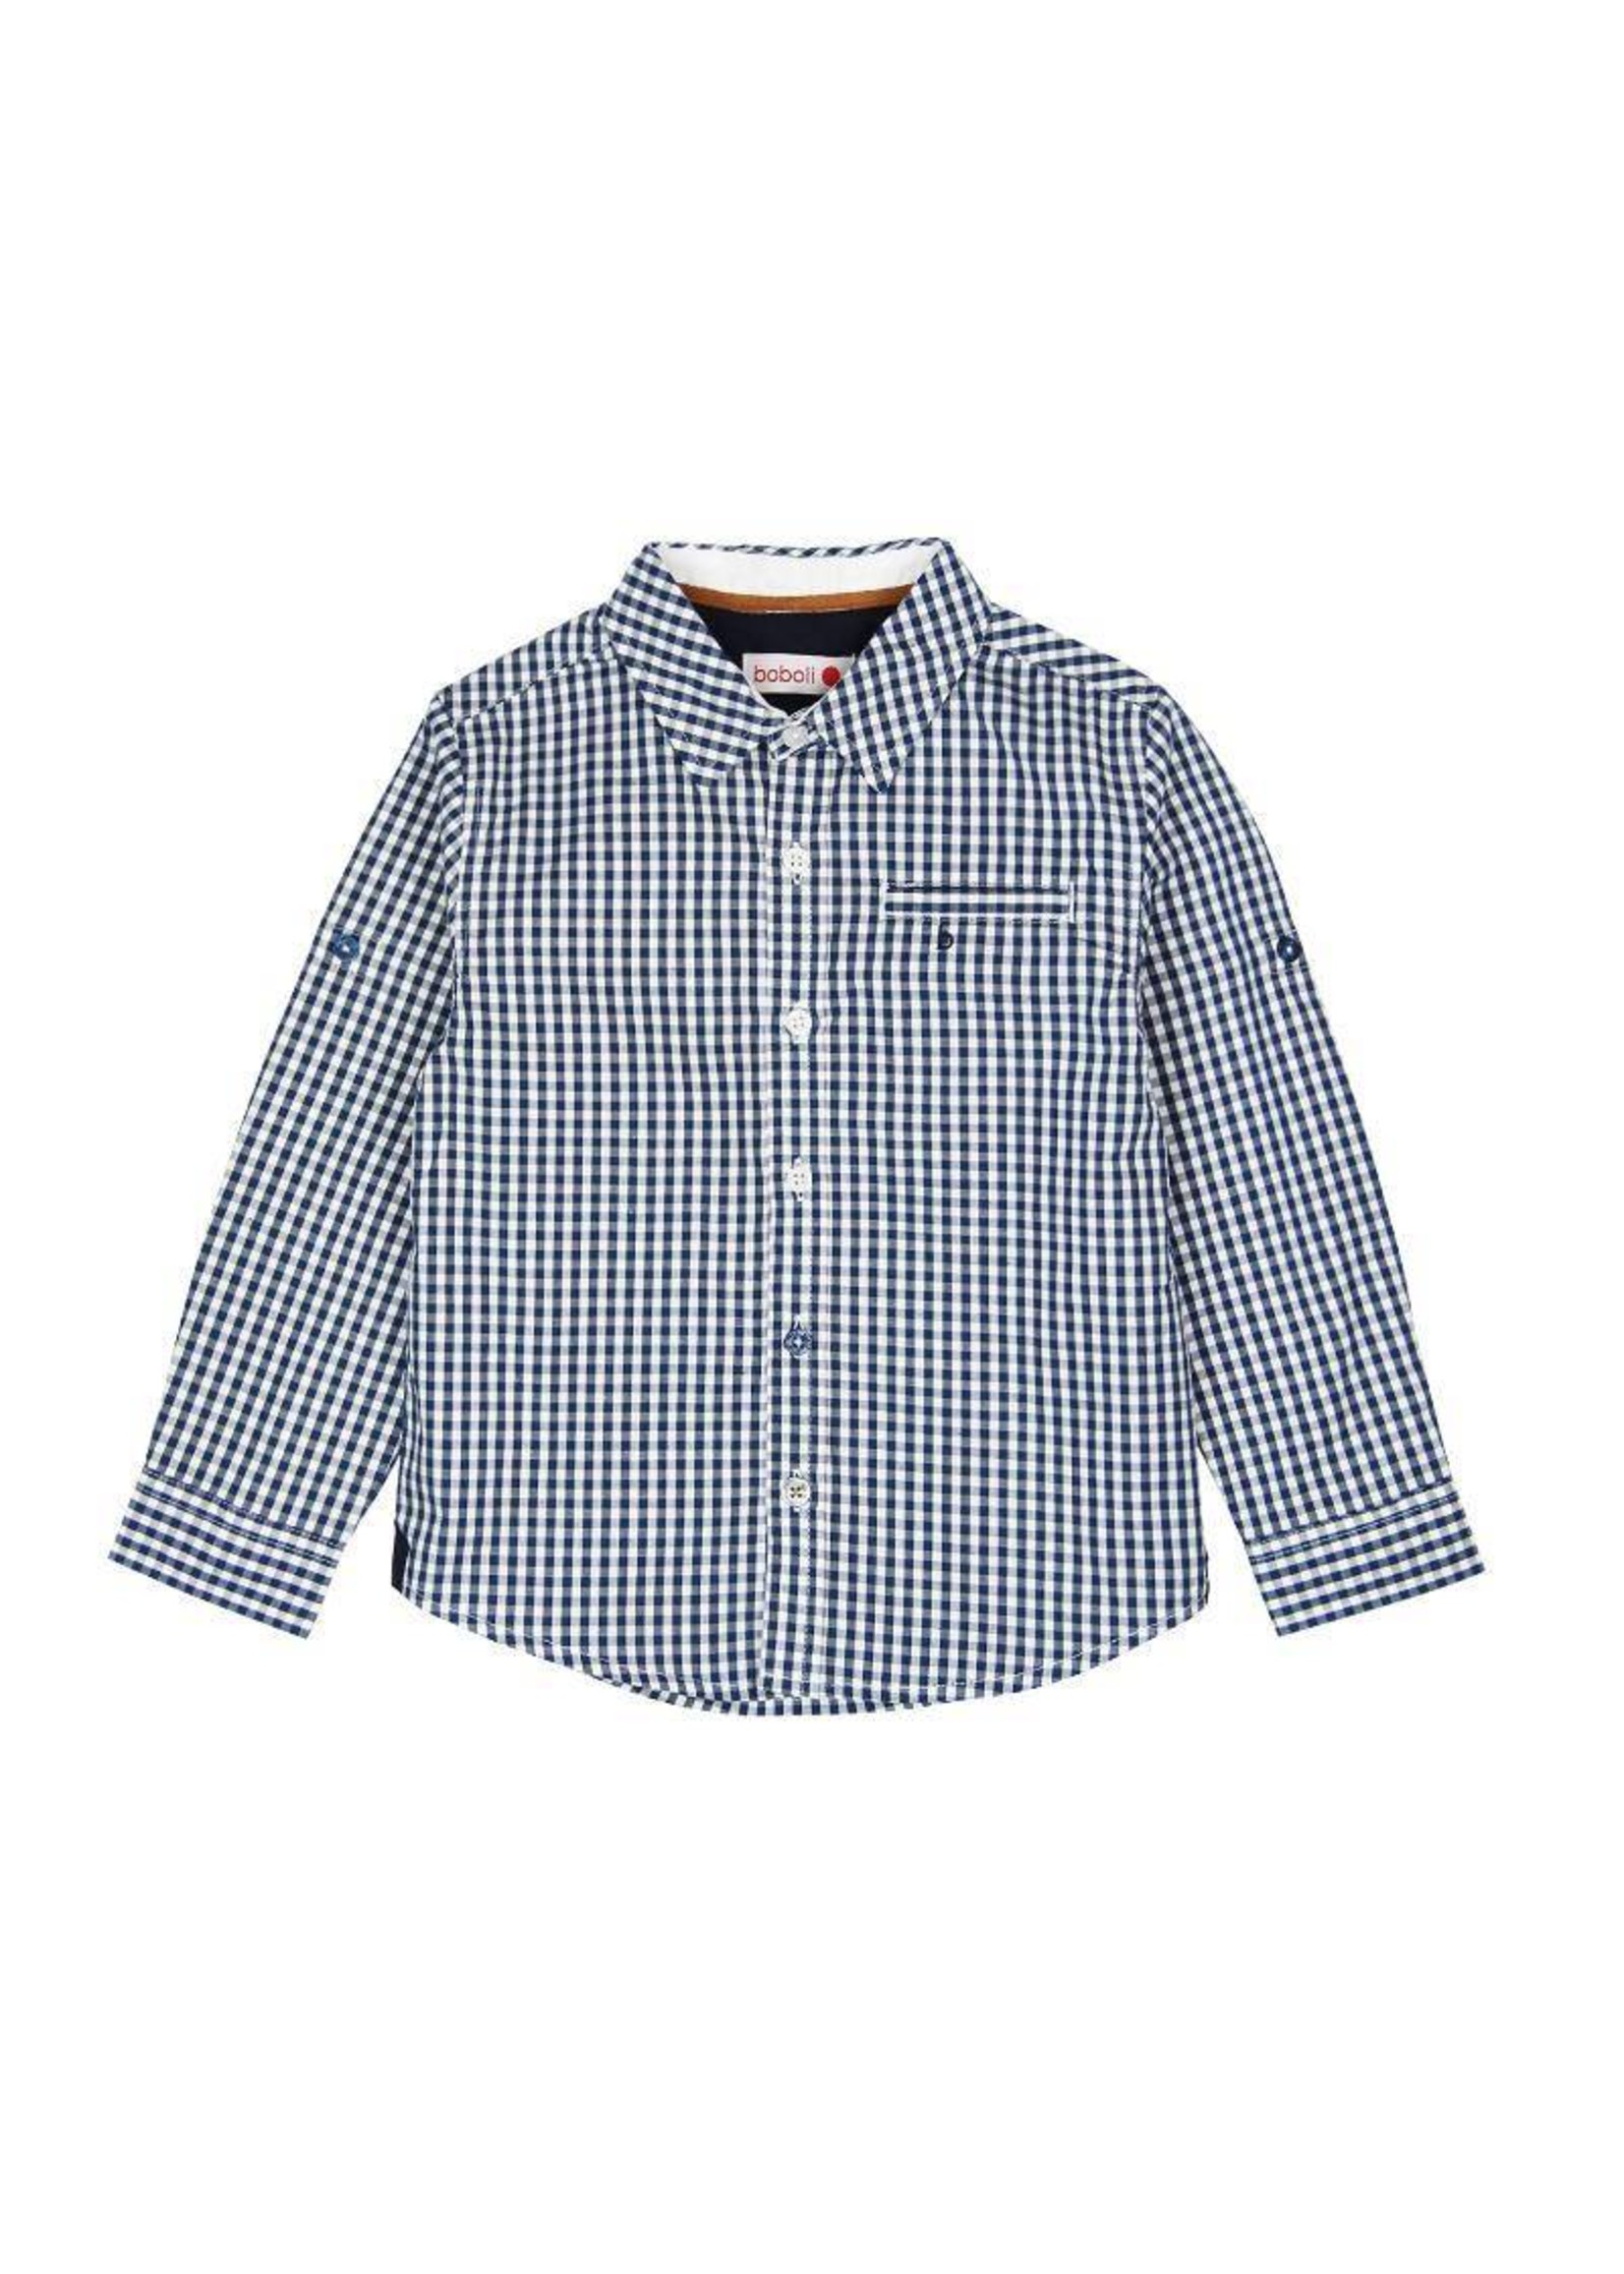 Boboli Poplin shirt for boy checks-2